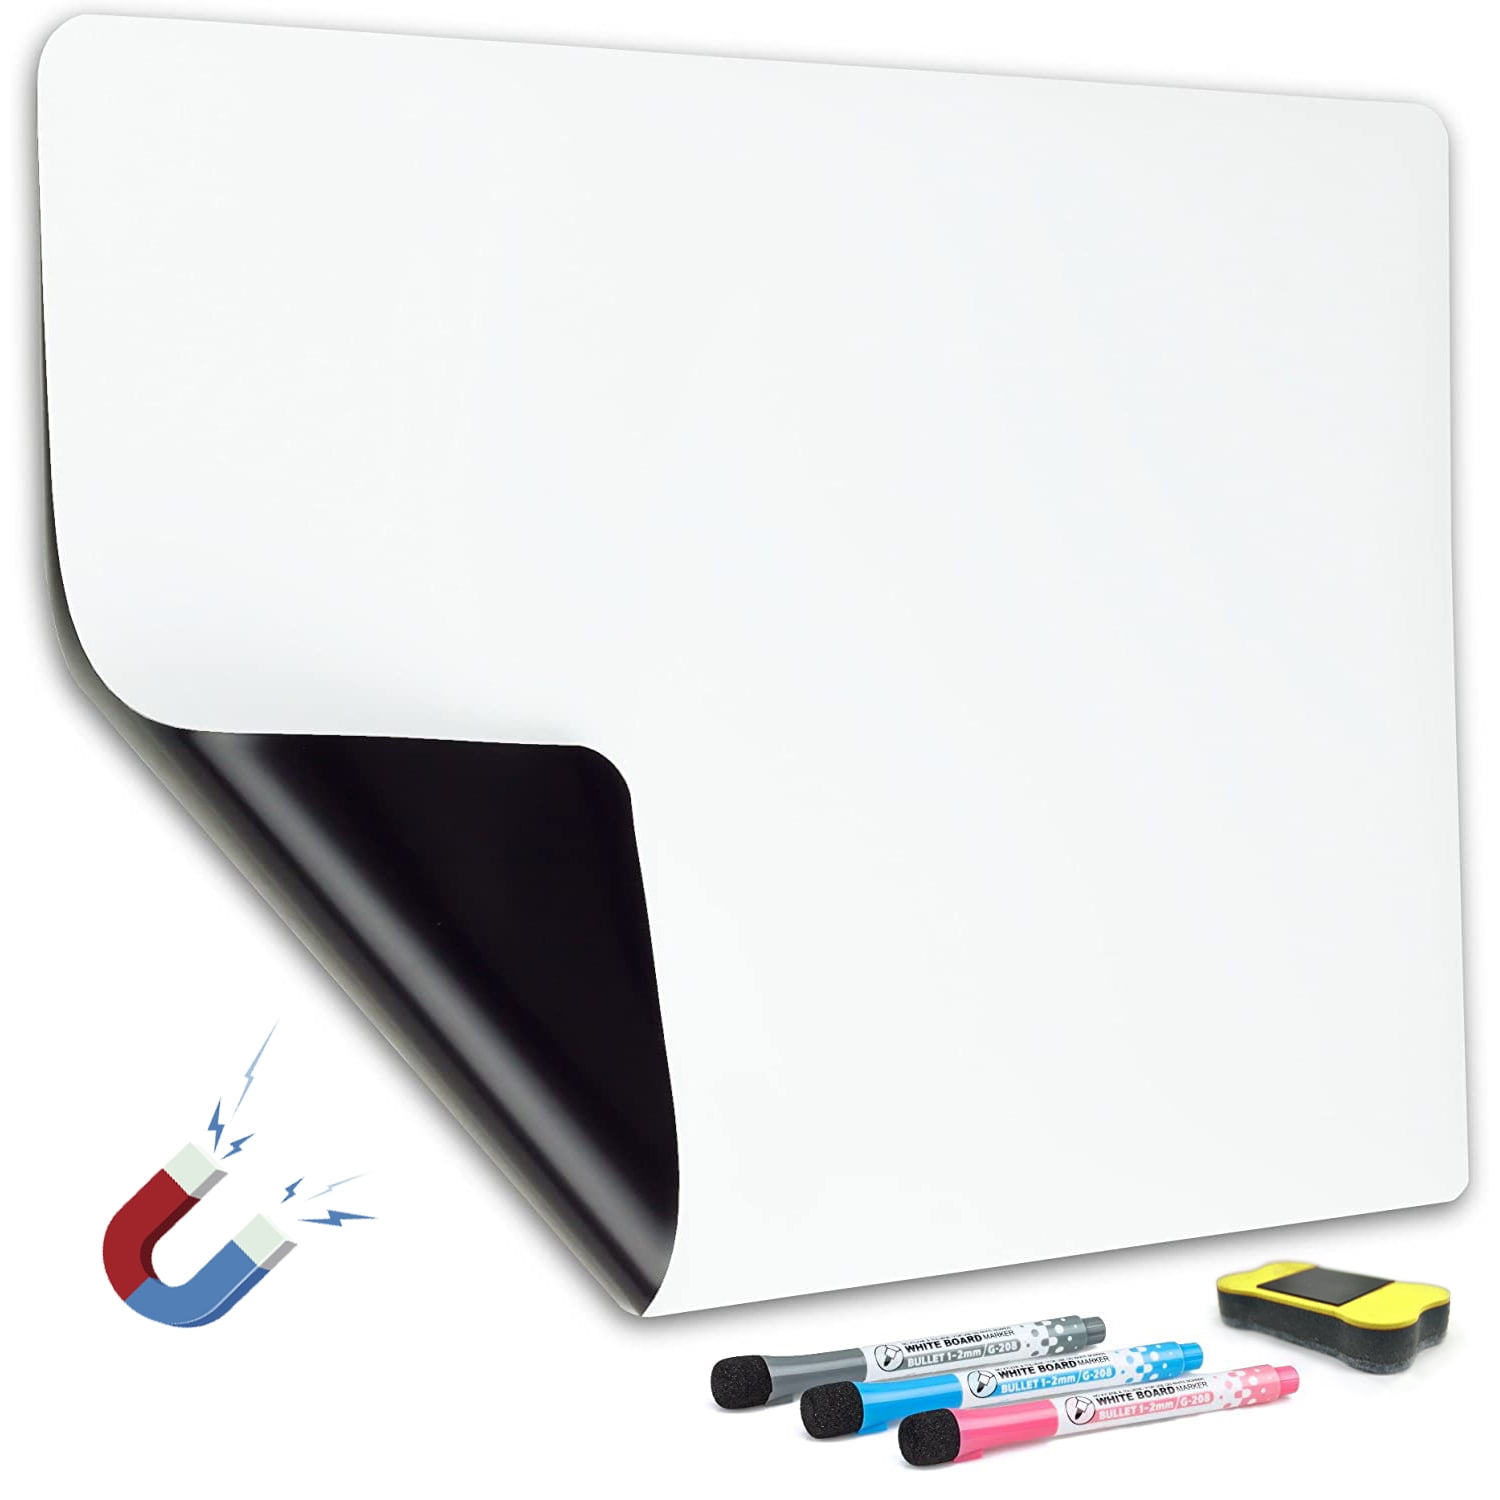 3M White Board & Chaulk Board Tape – The Garage Journal